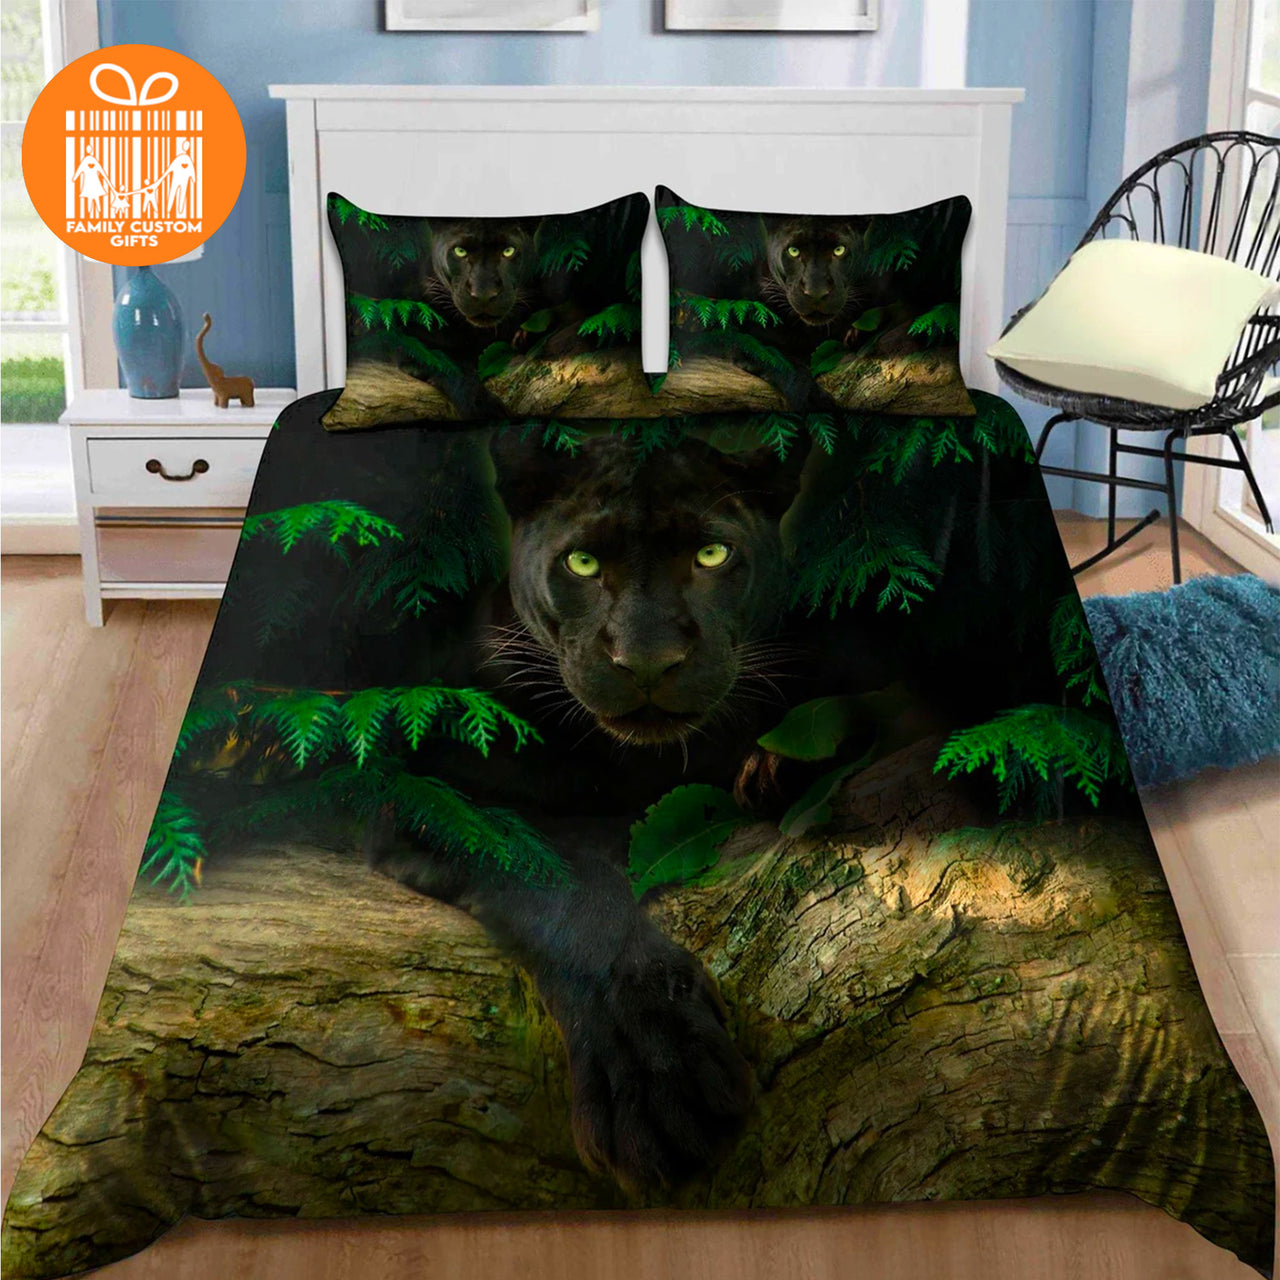 Comforter Leopard Black Panther Custom Bedding Set for Kids Teens Adult Personalized Premium Bed Set